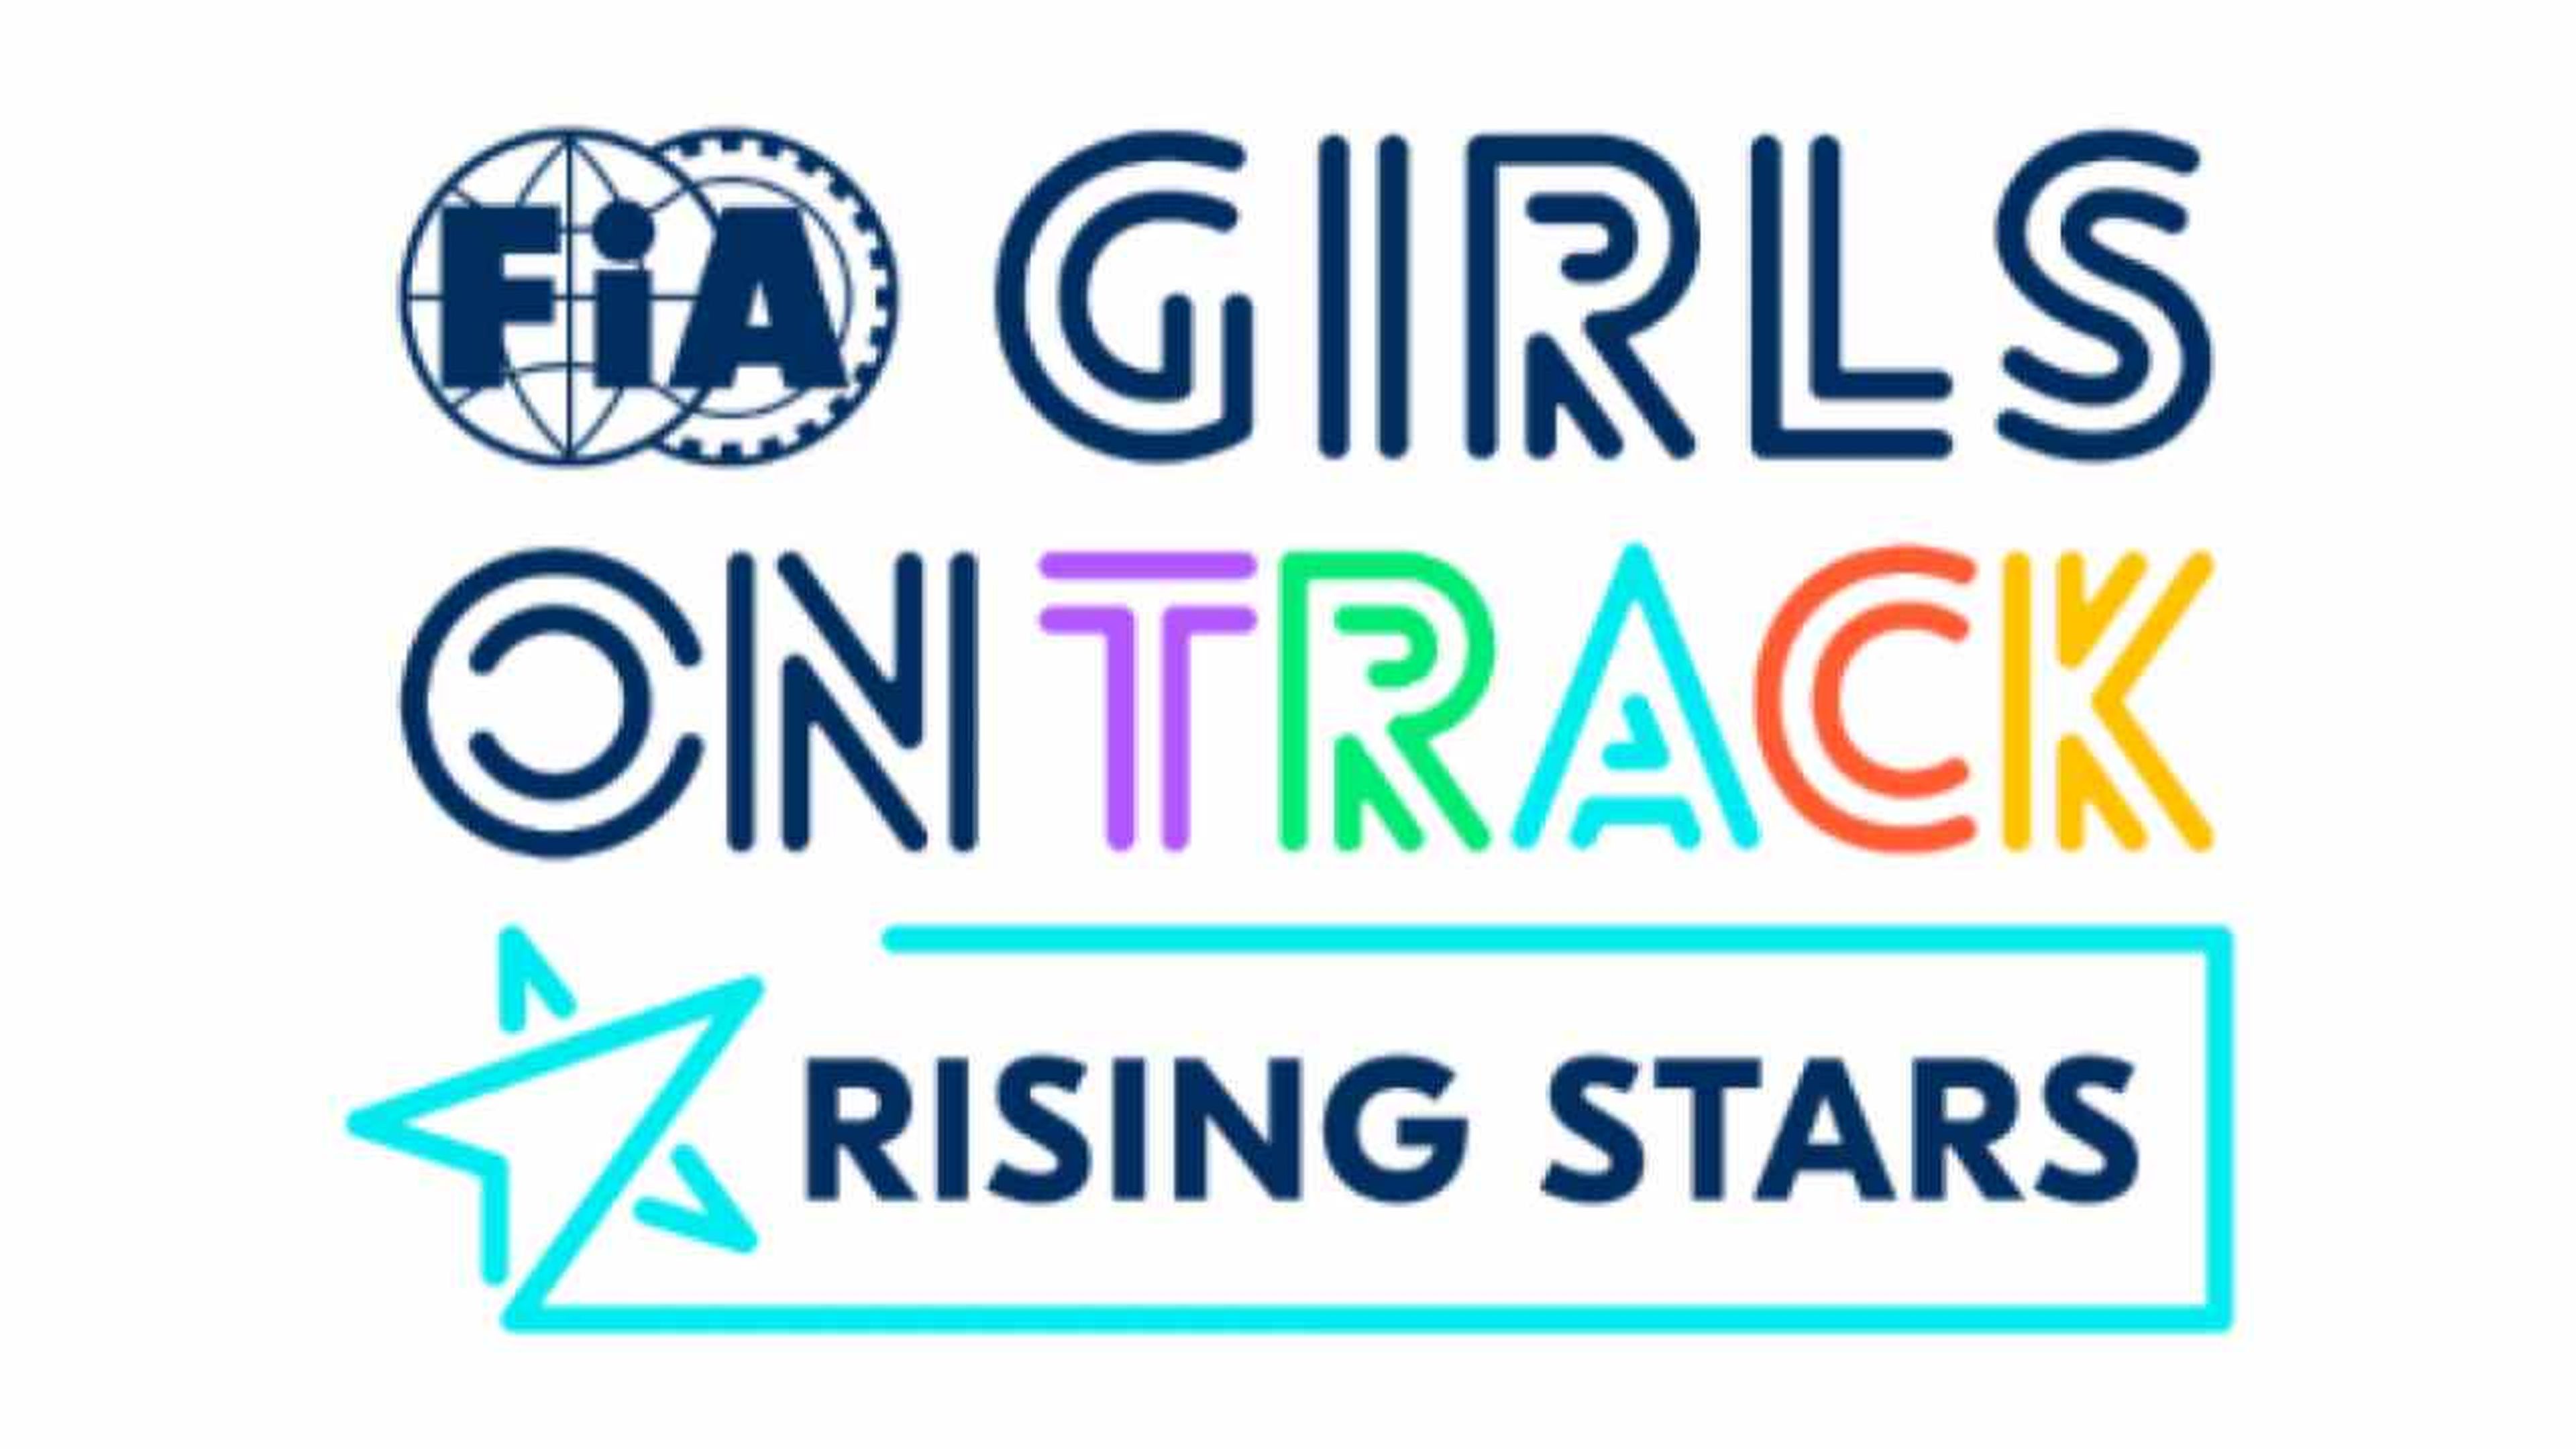 FIA Girls on Track